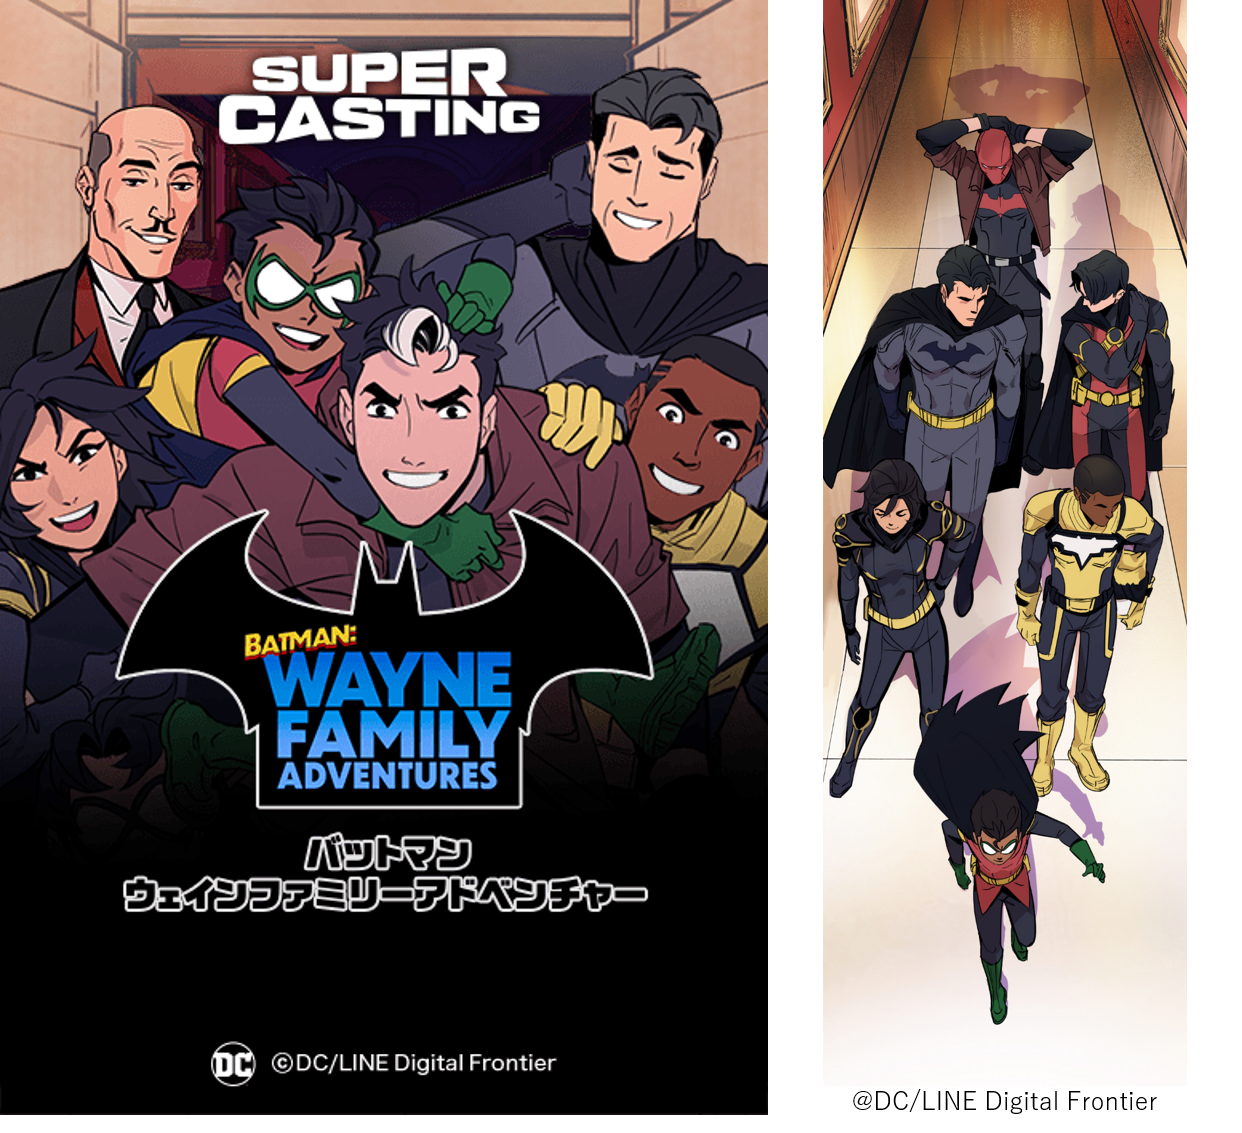 Lineマンガ バットマン のオリジナルwebtoon作品がついに連載開始 Batman Wayne Family Adventures Line Digital Frontier株式会社のプレスリリース